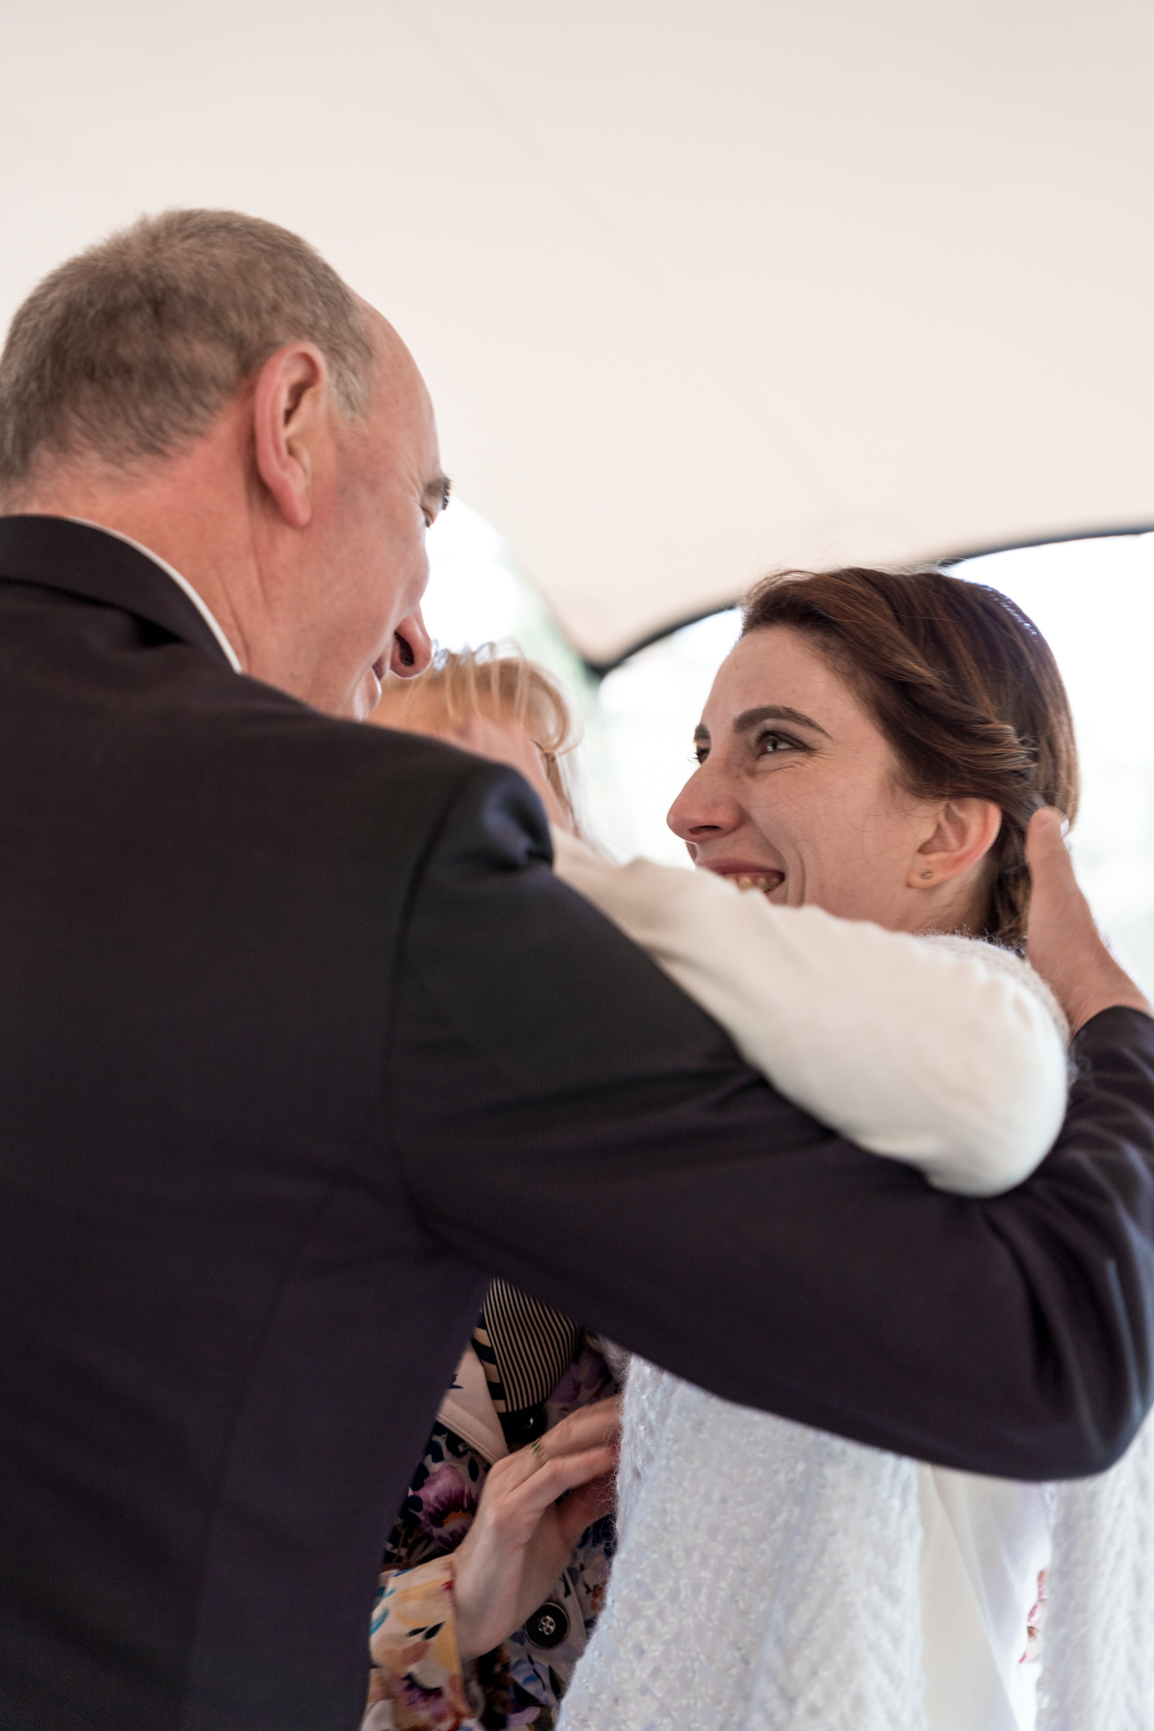 Amelie Charlet photographe reportage photo mariage mariée qui embrasse son papa